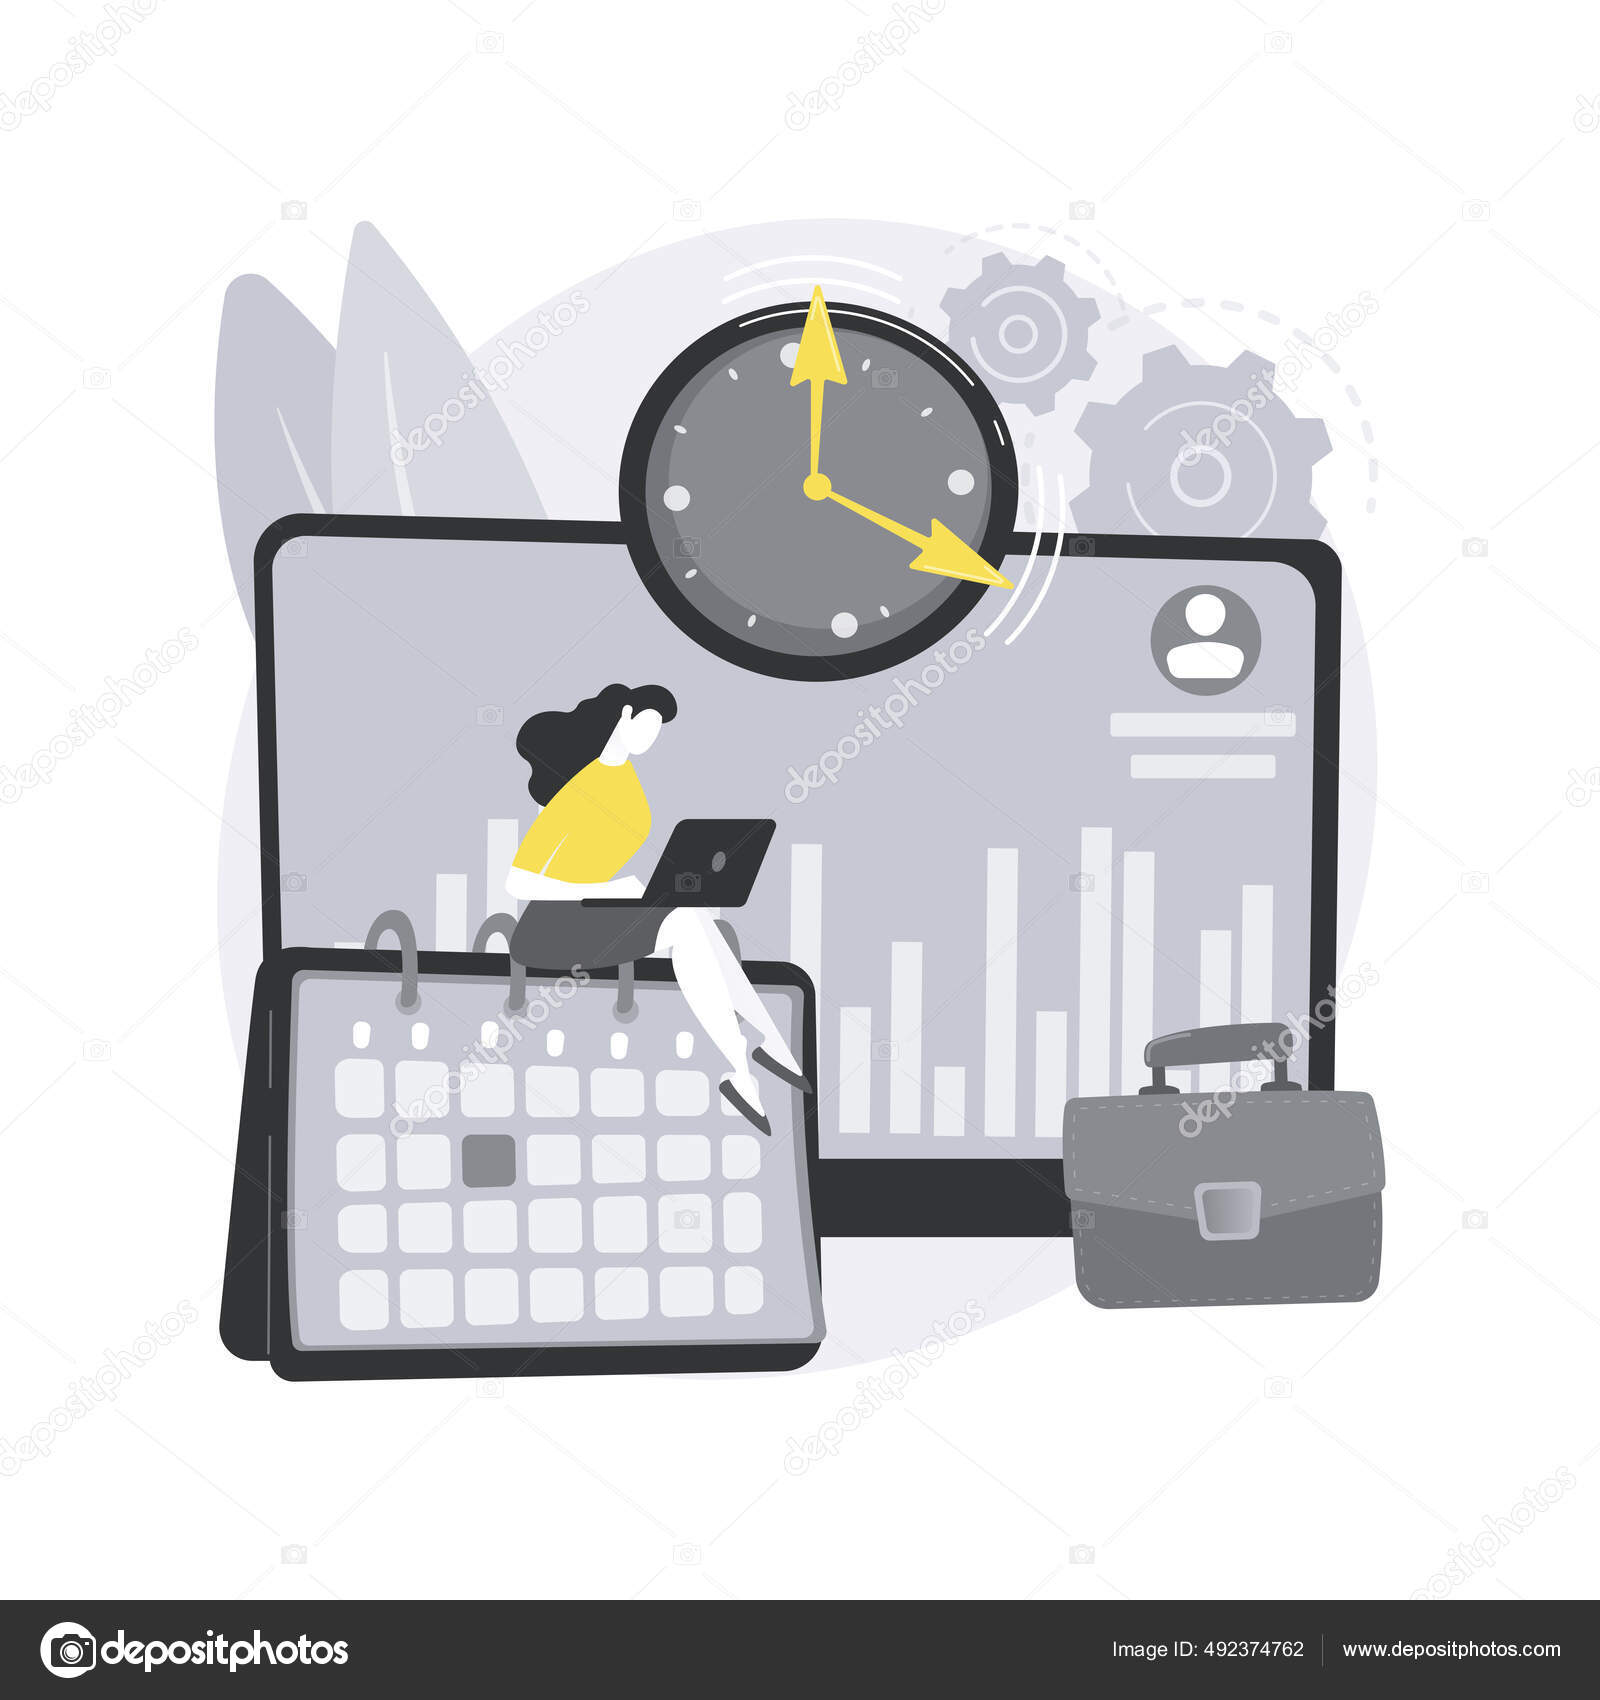 https://st2.depositphotos.com/1001599/49237/v/1600/depositphotos_492374762-stock-illustration-time-and-attendance-tracking-system.jpg